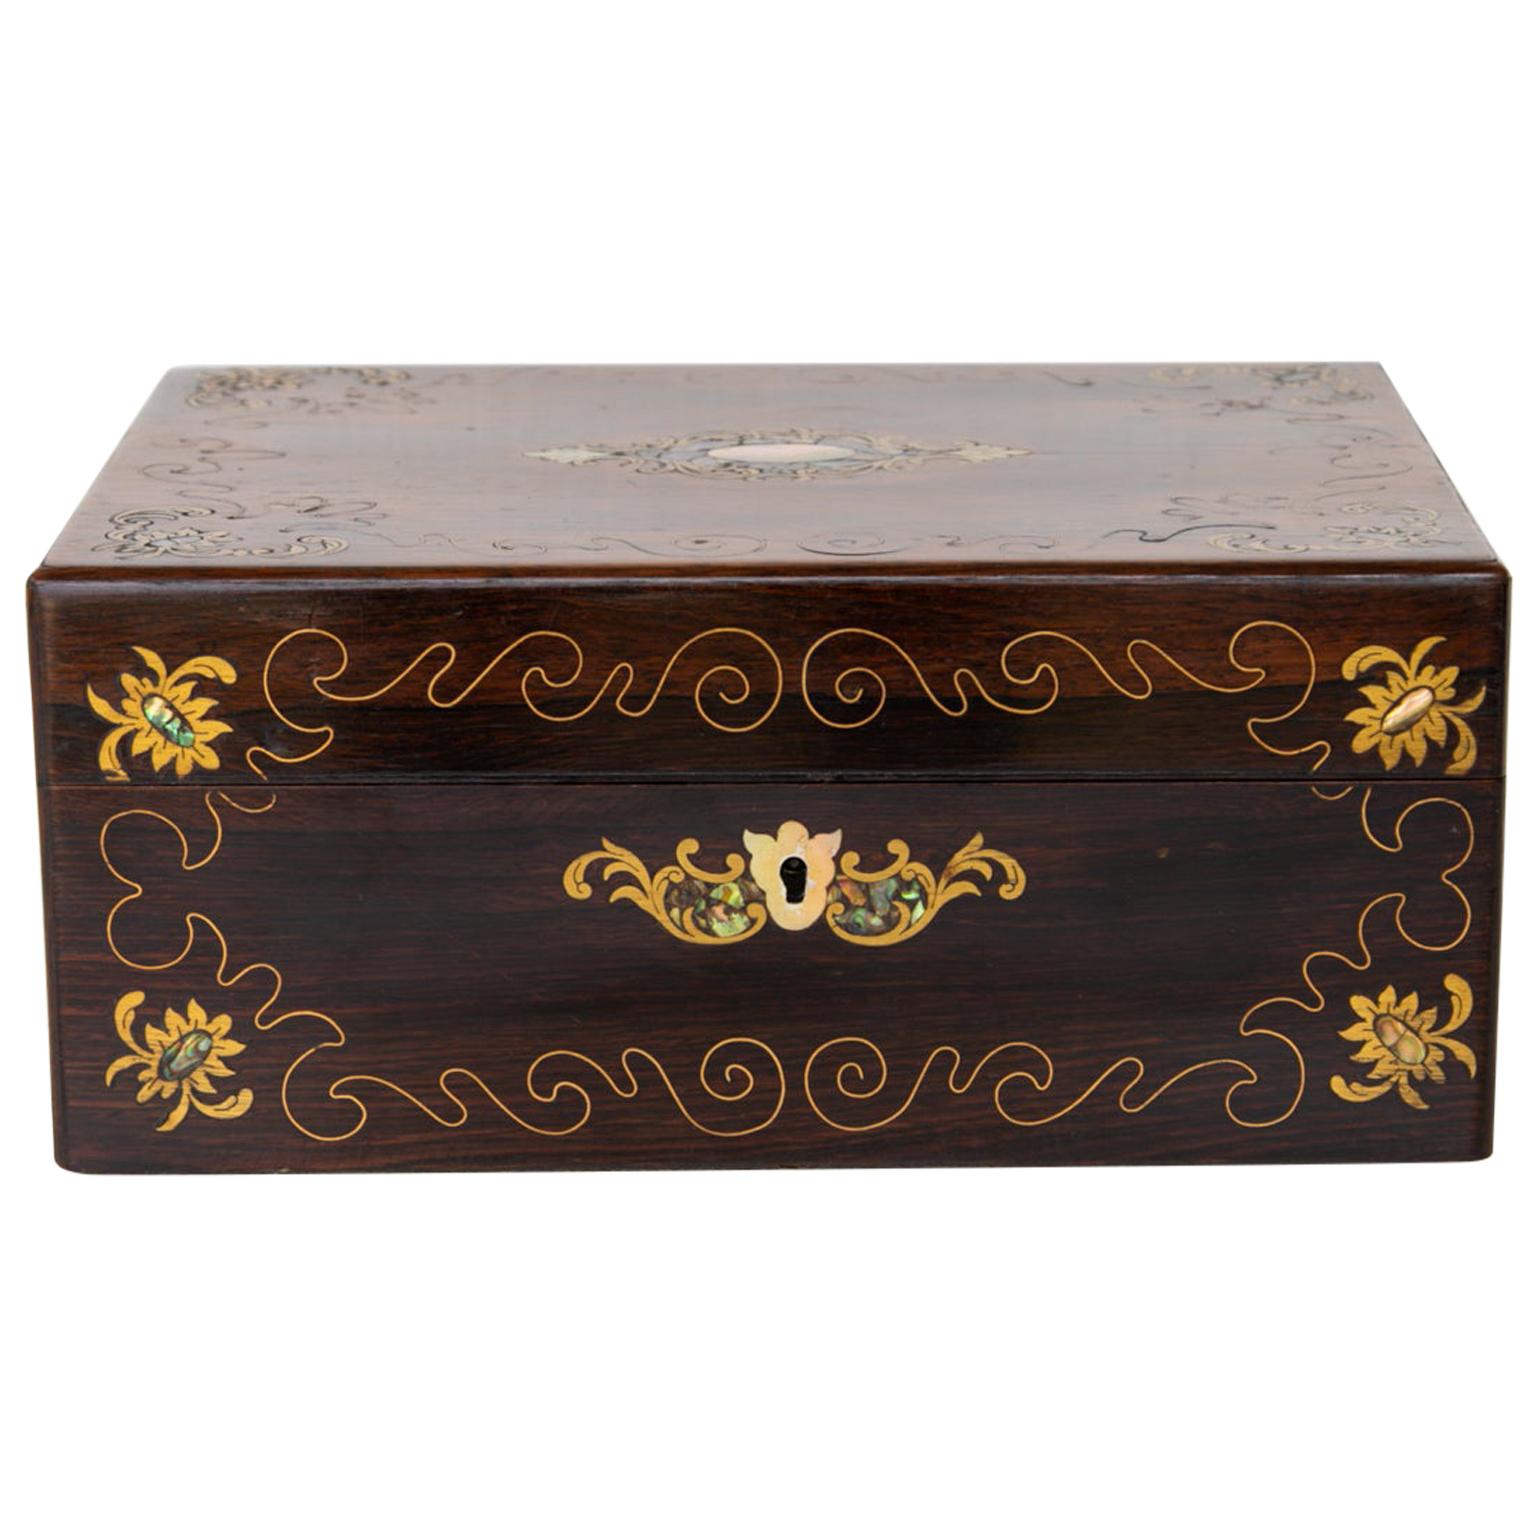 Rosewood Inlaid Jewelry Box